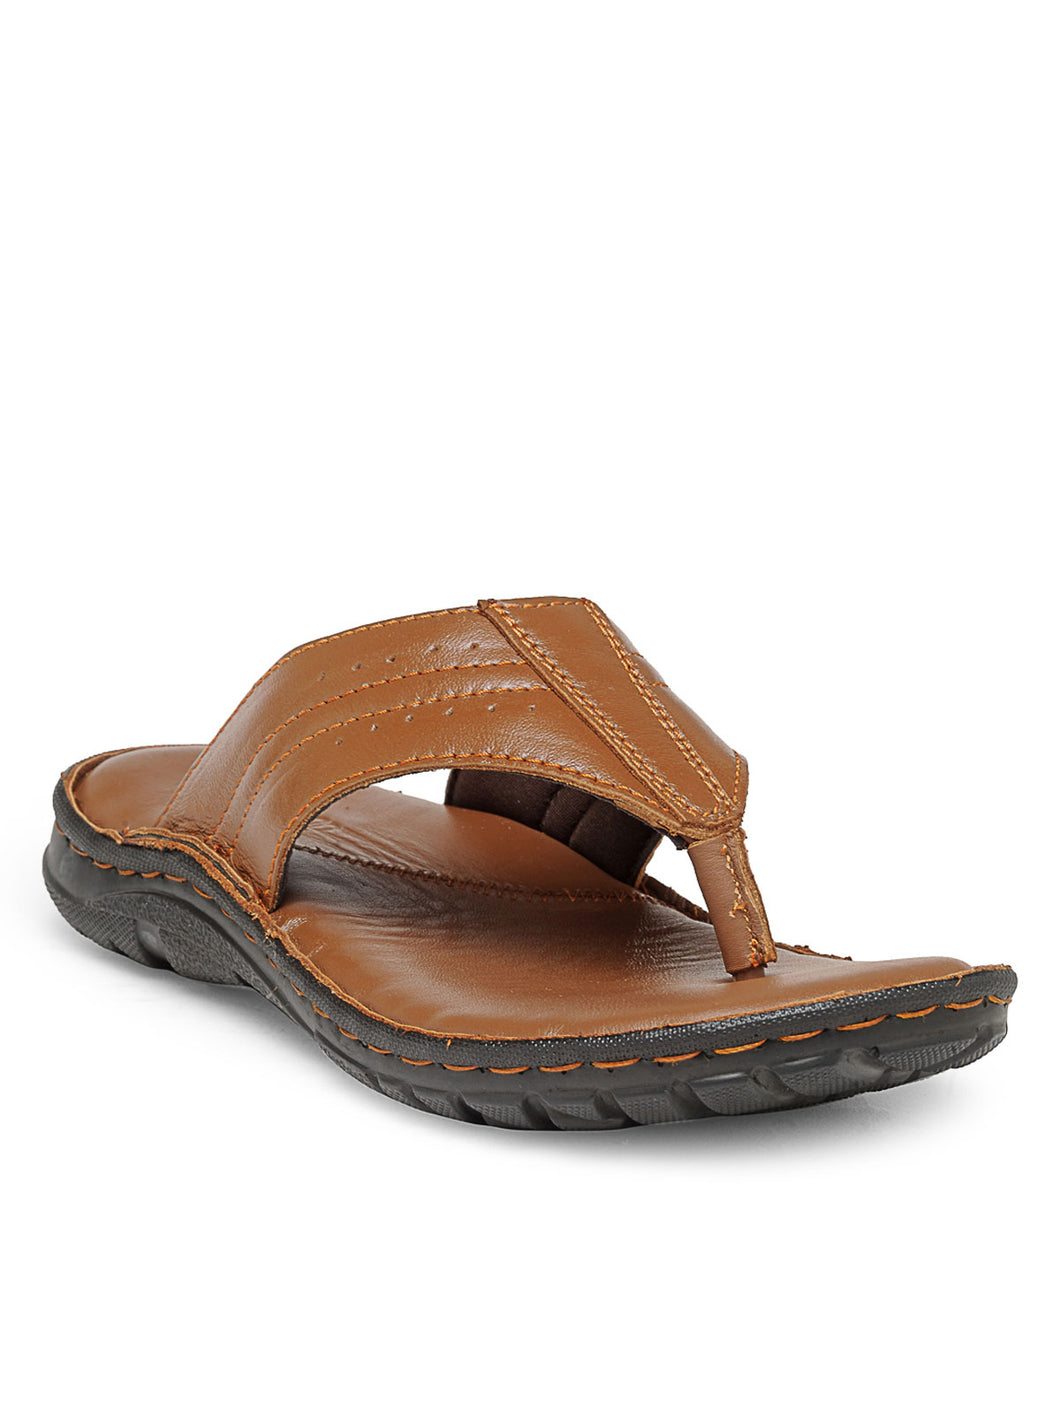 Teakwood Men's Real Leather Sandals